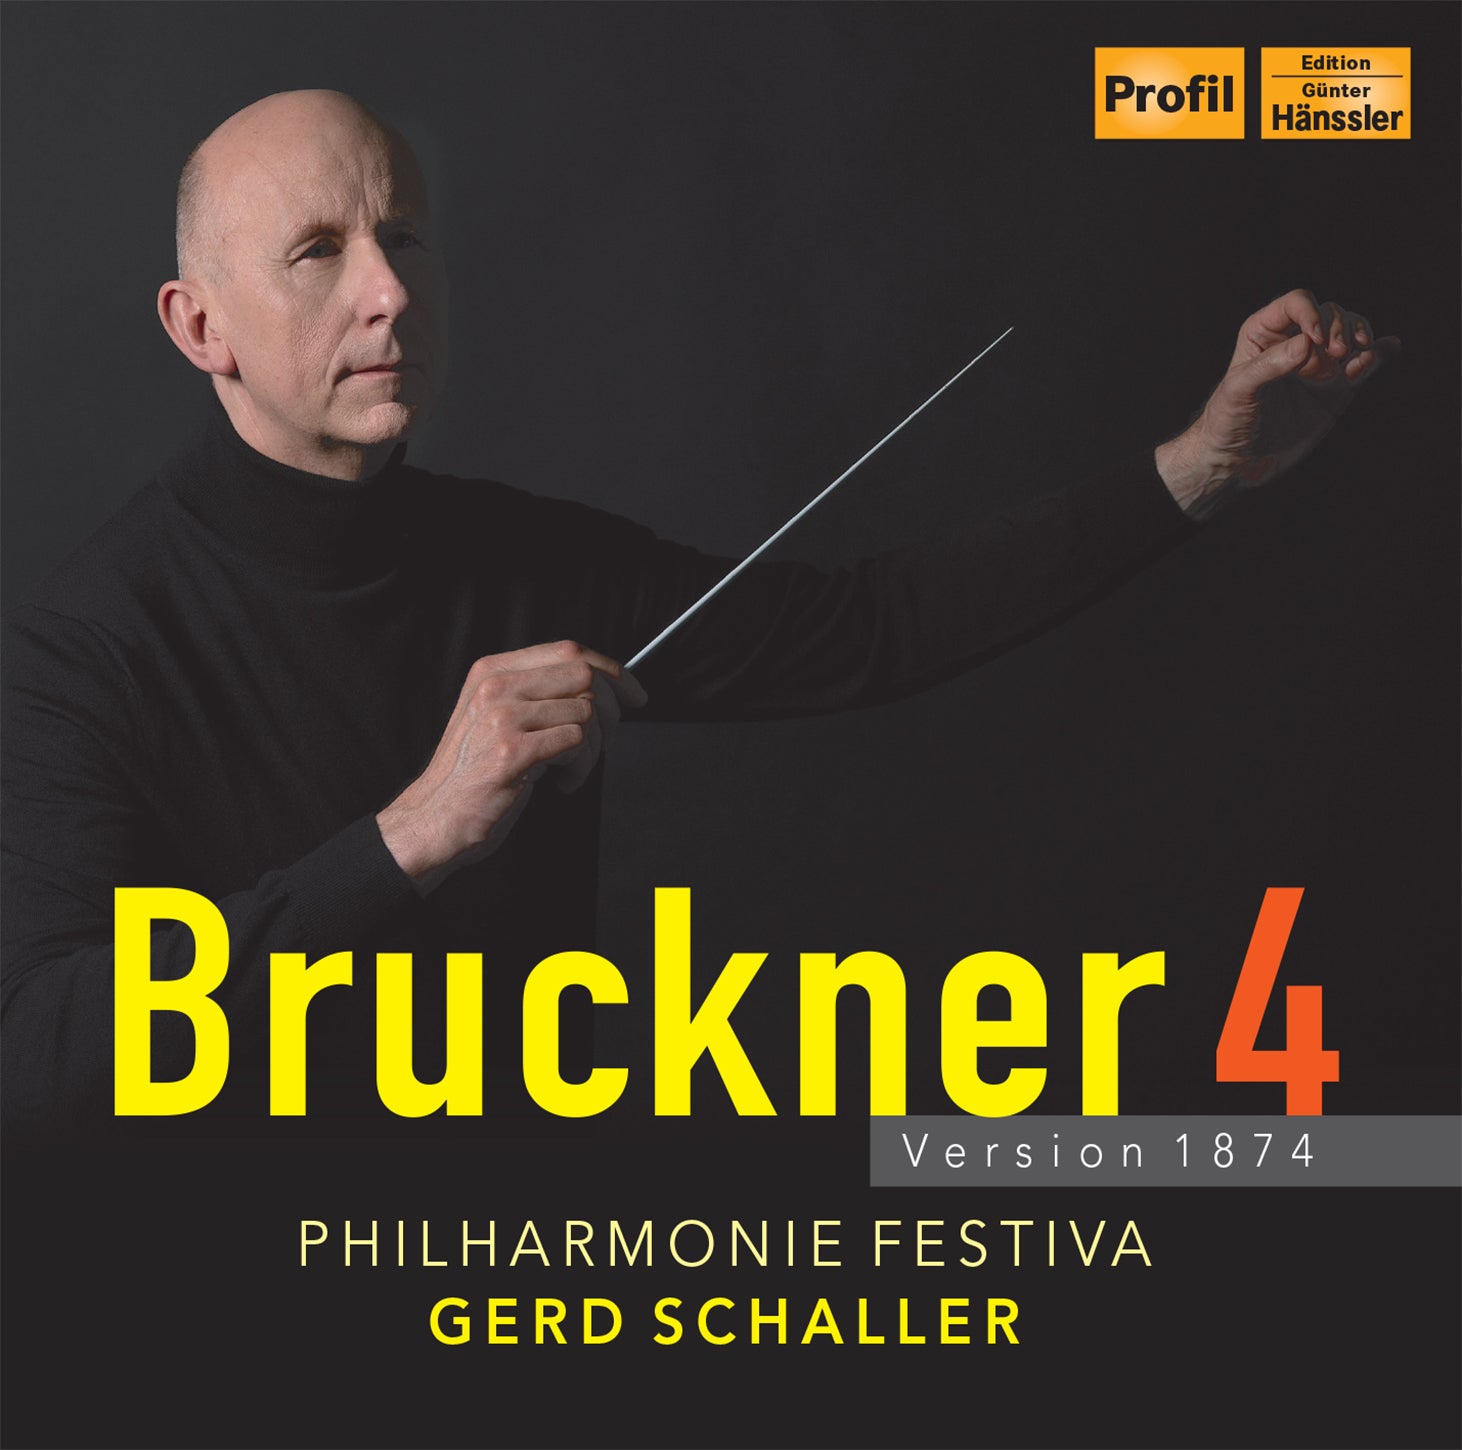 Bruckner: Symphony no. 4, 1874 Version / Schaller, Philharmonie Festiva